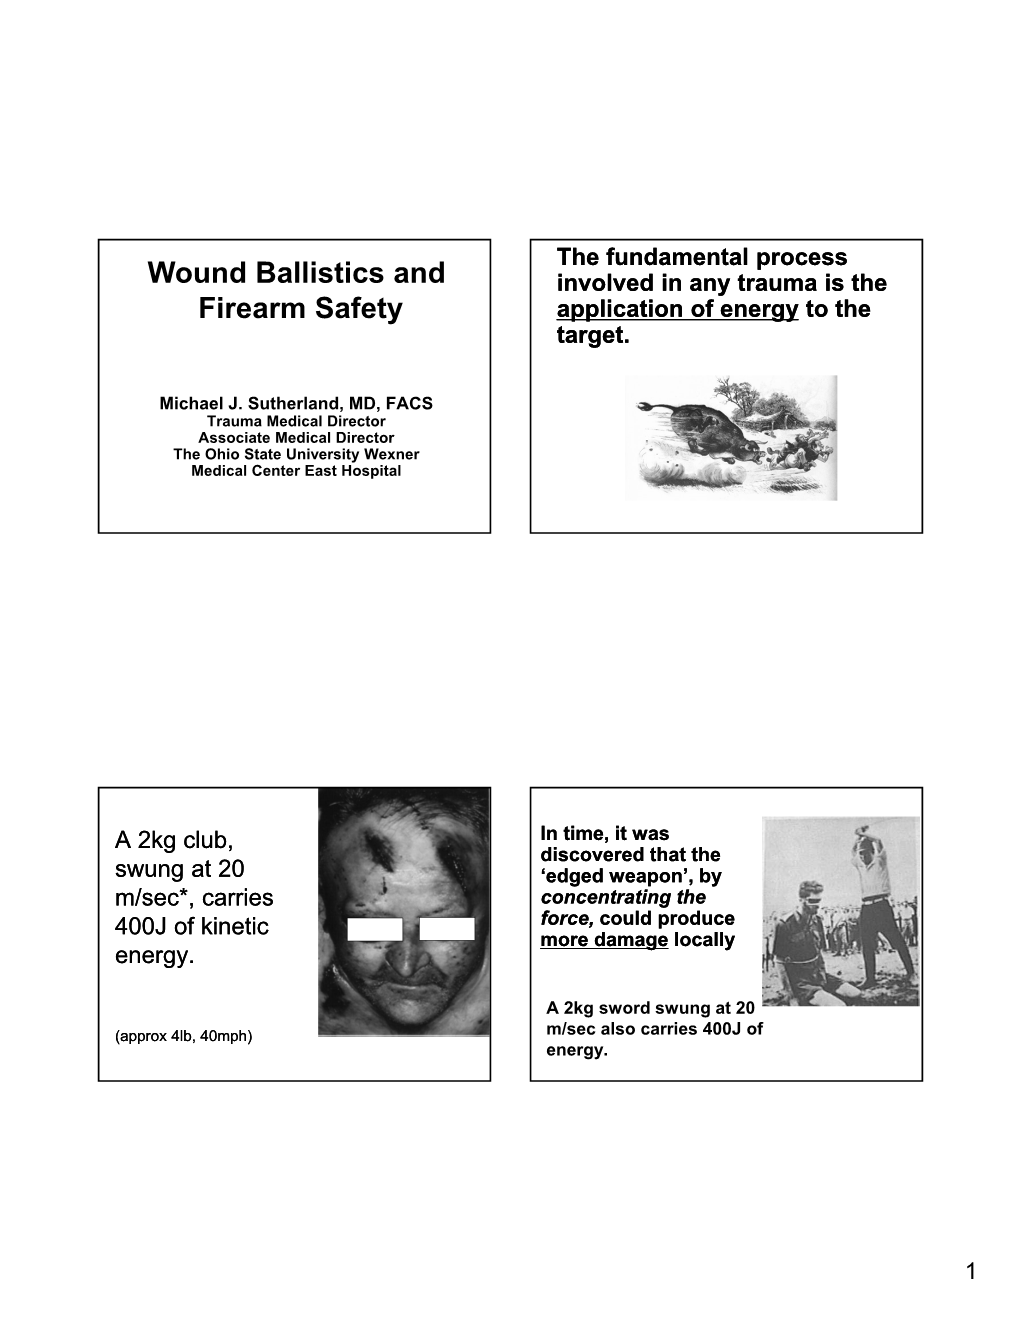 Wound Ballistics and Firearm Safety